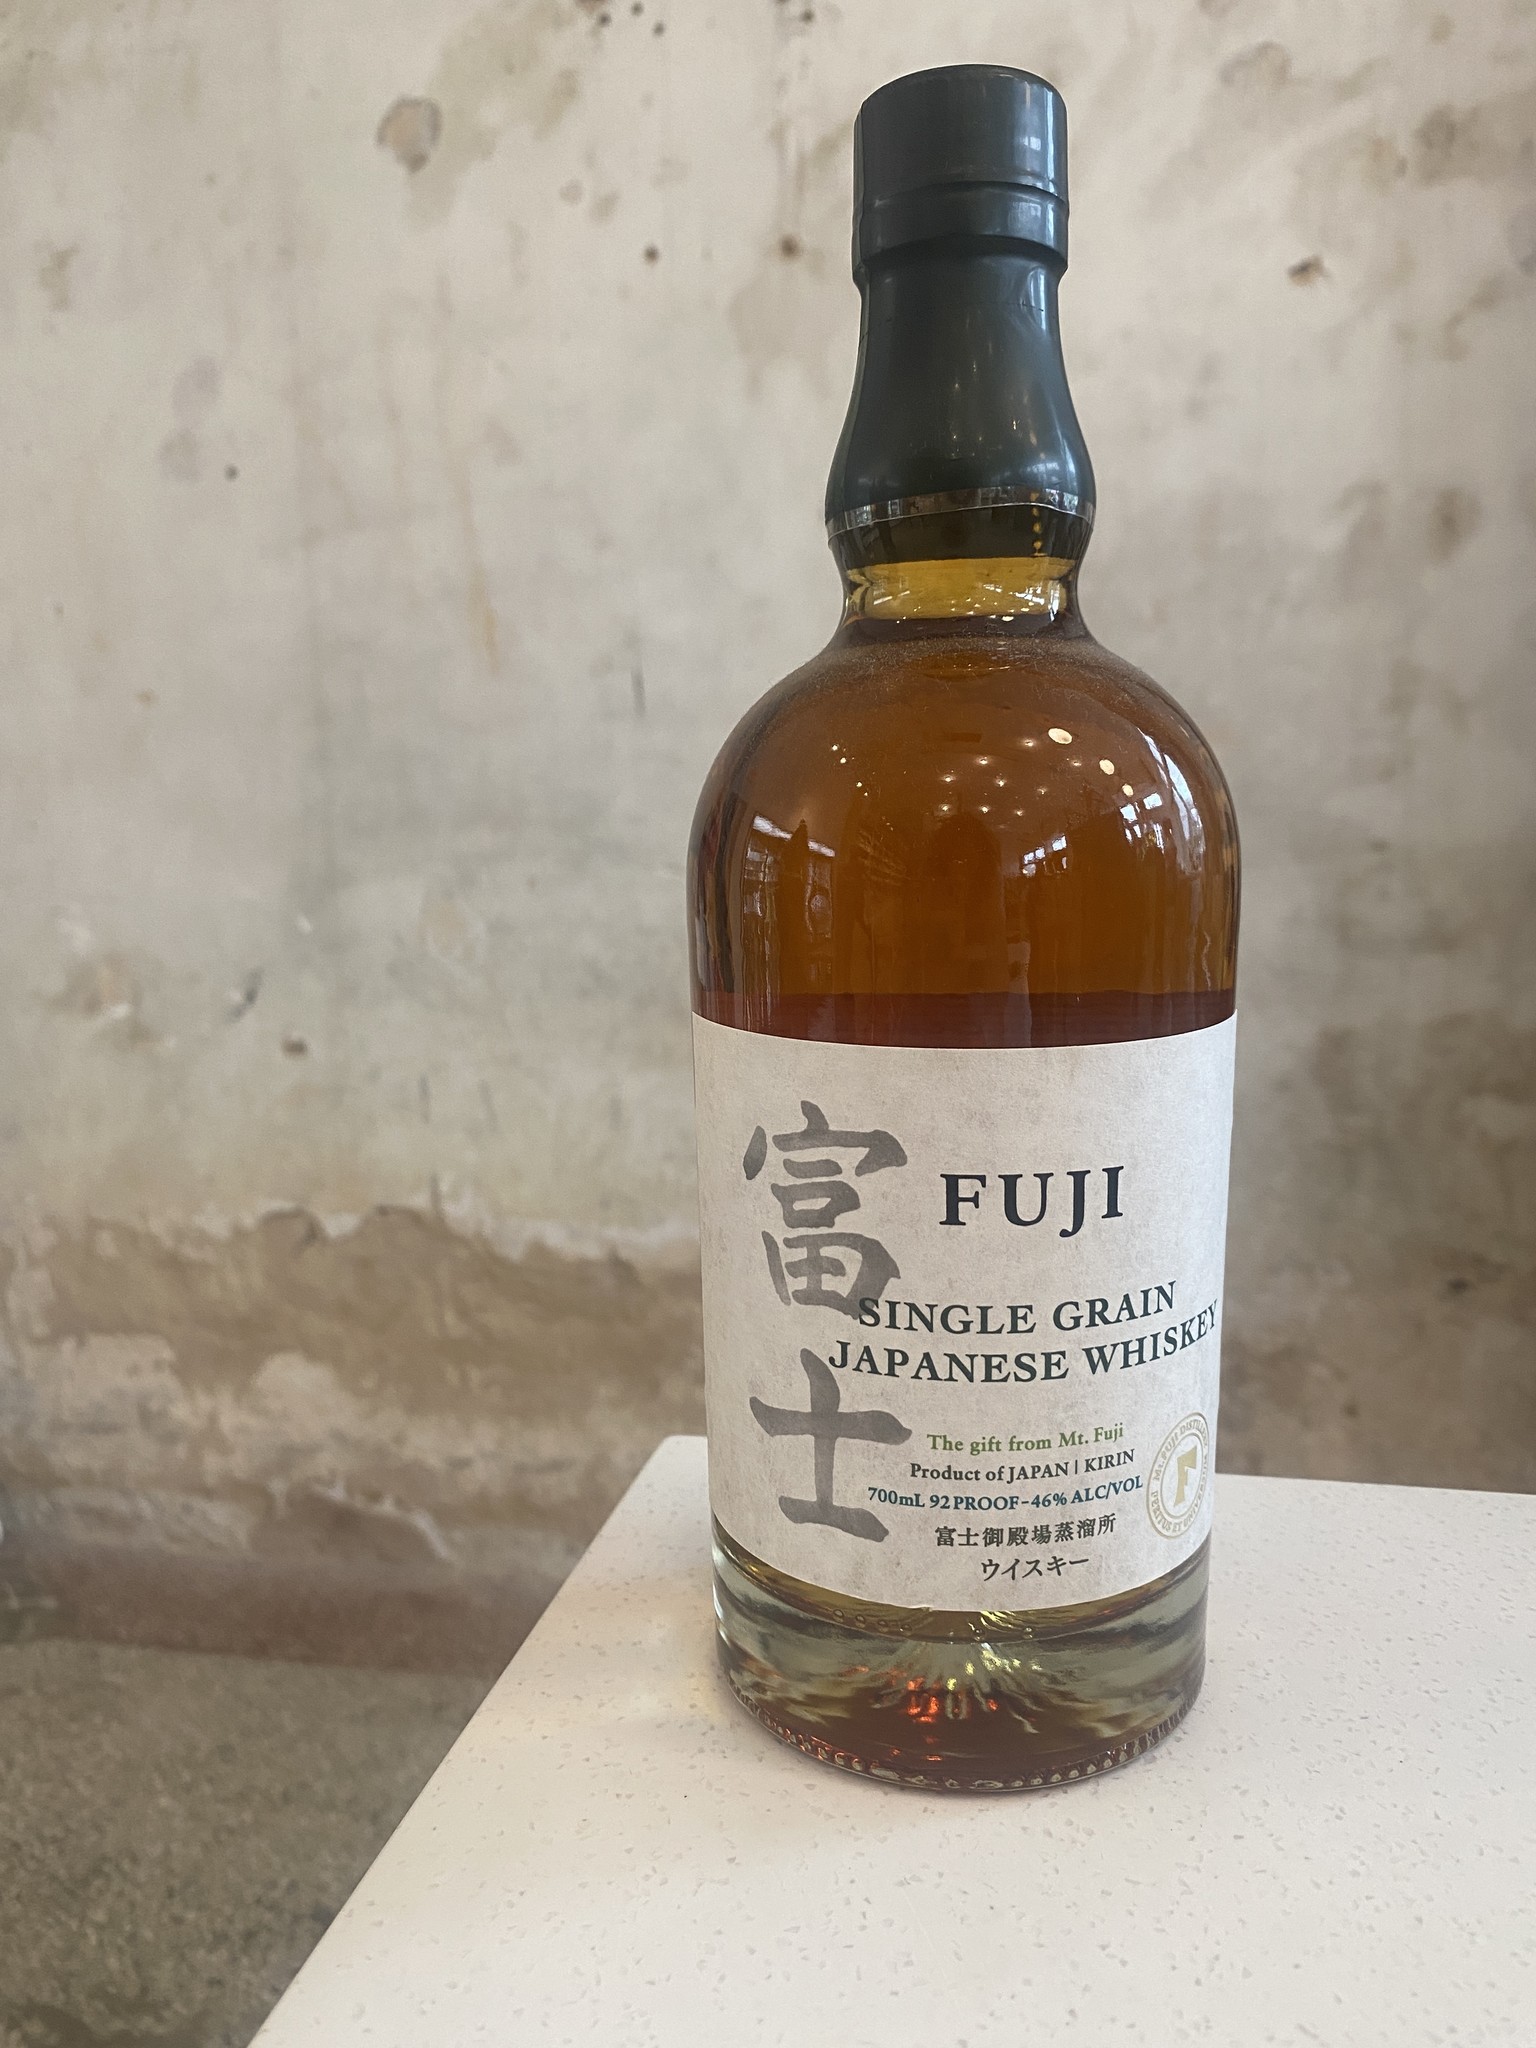 Fuji Fuji Single Grain Japanese Whisky